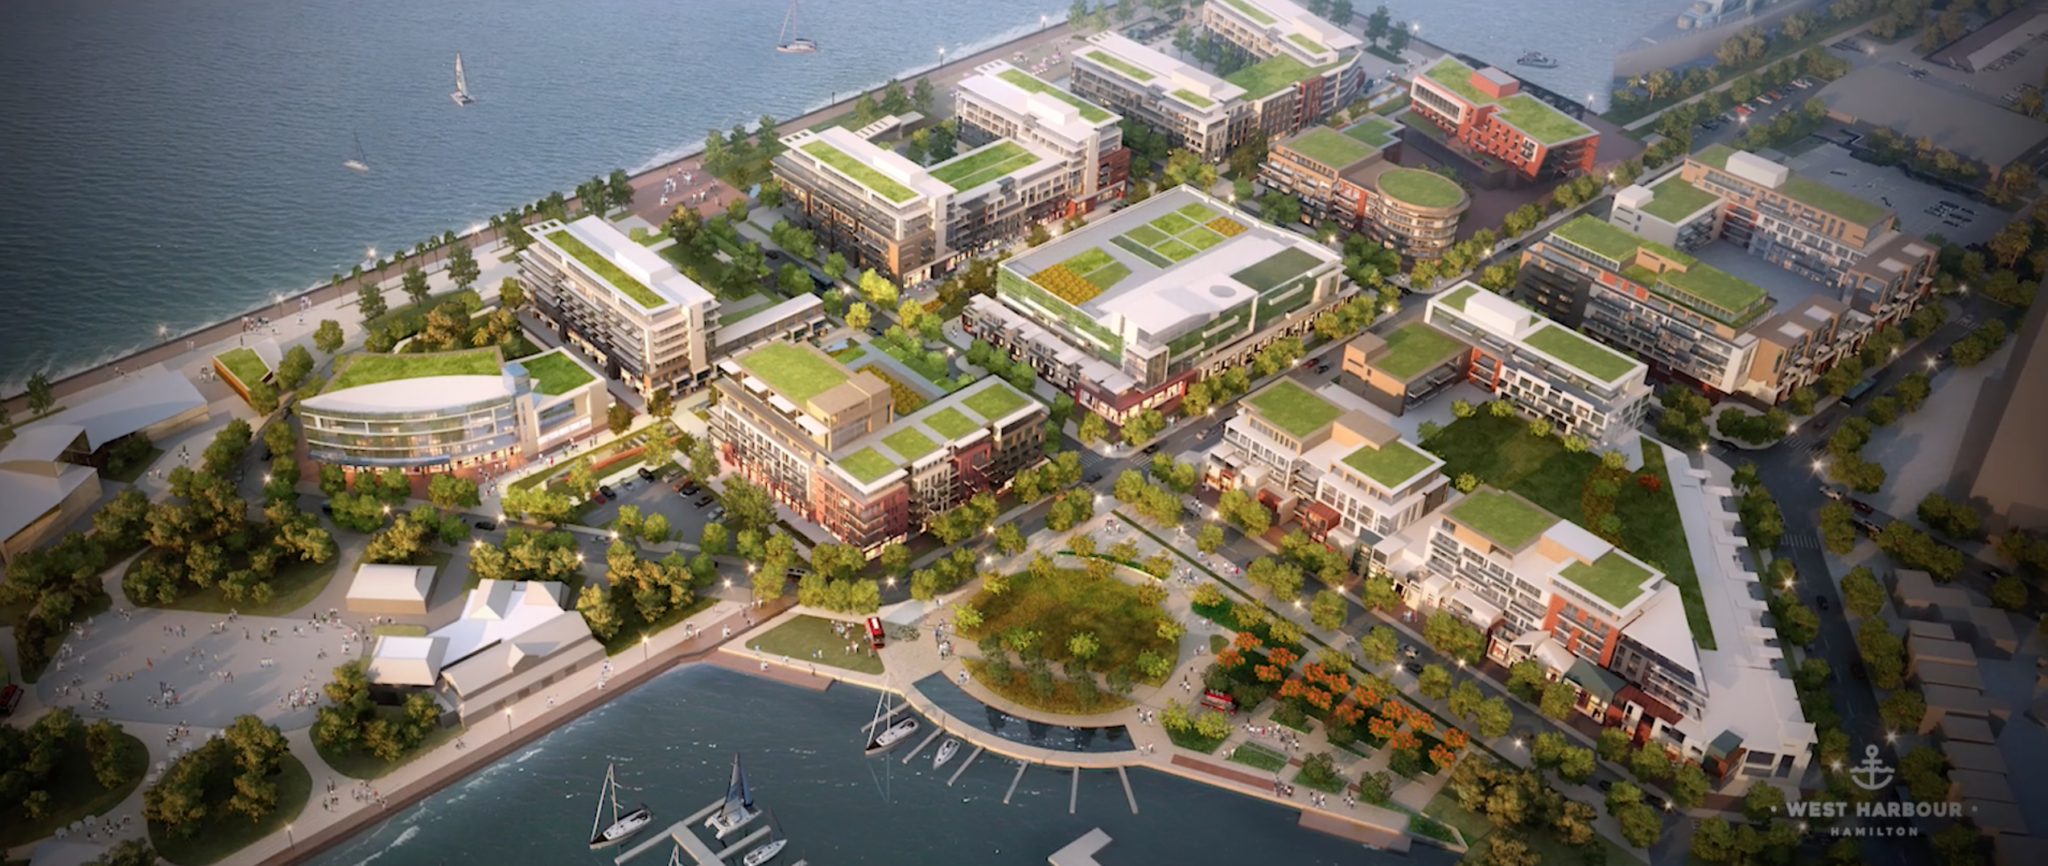 Project Launch: City of Hamilton West Harbour Redevelopment Video